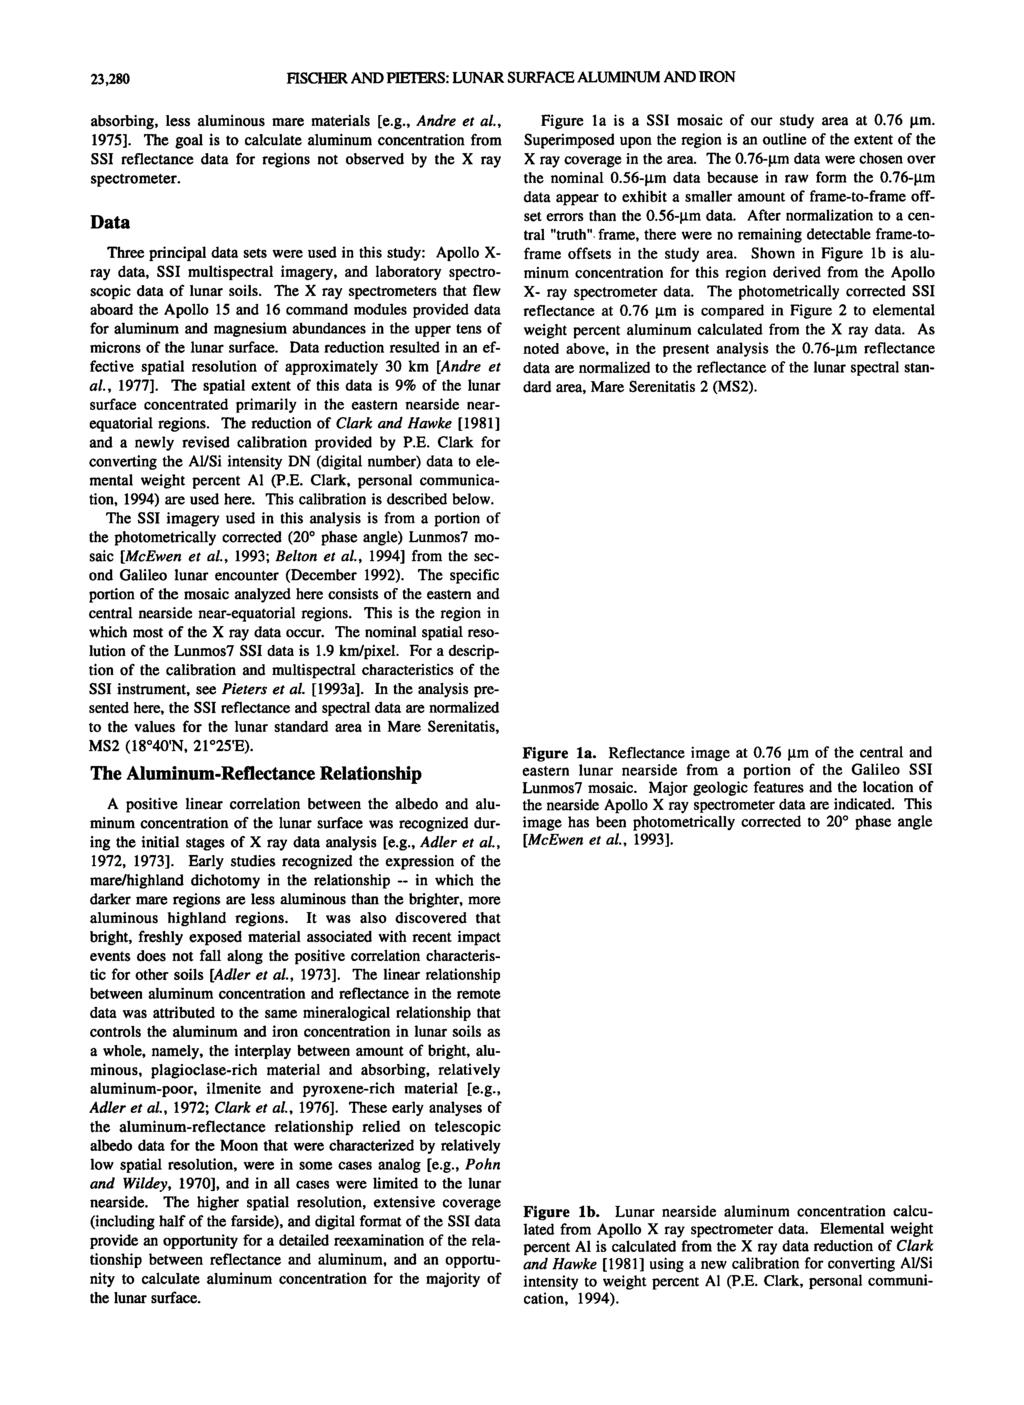 ß 23,280 FISCHER AND PIETERS: LUNAR SURFACE ALUMINUM AND IRON absorbing, less aluminous mare materials [e.g., Andre et al., 1975].